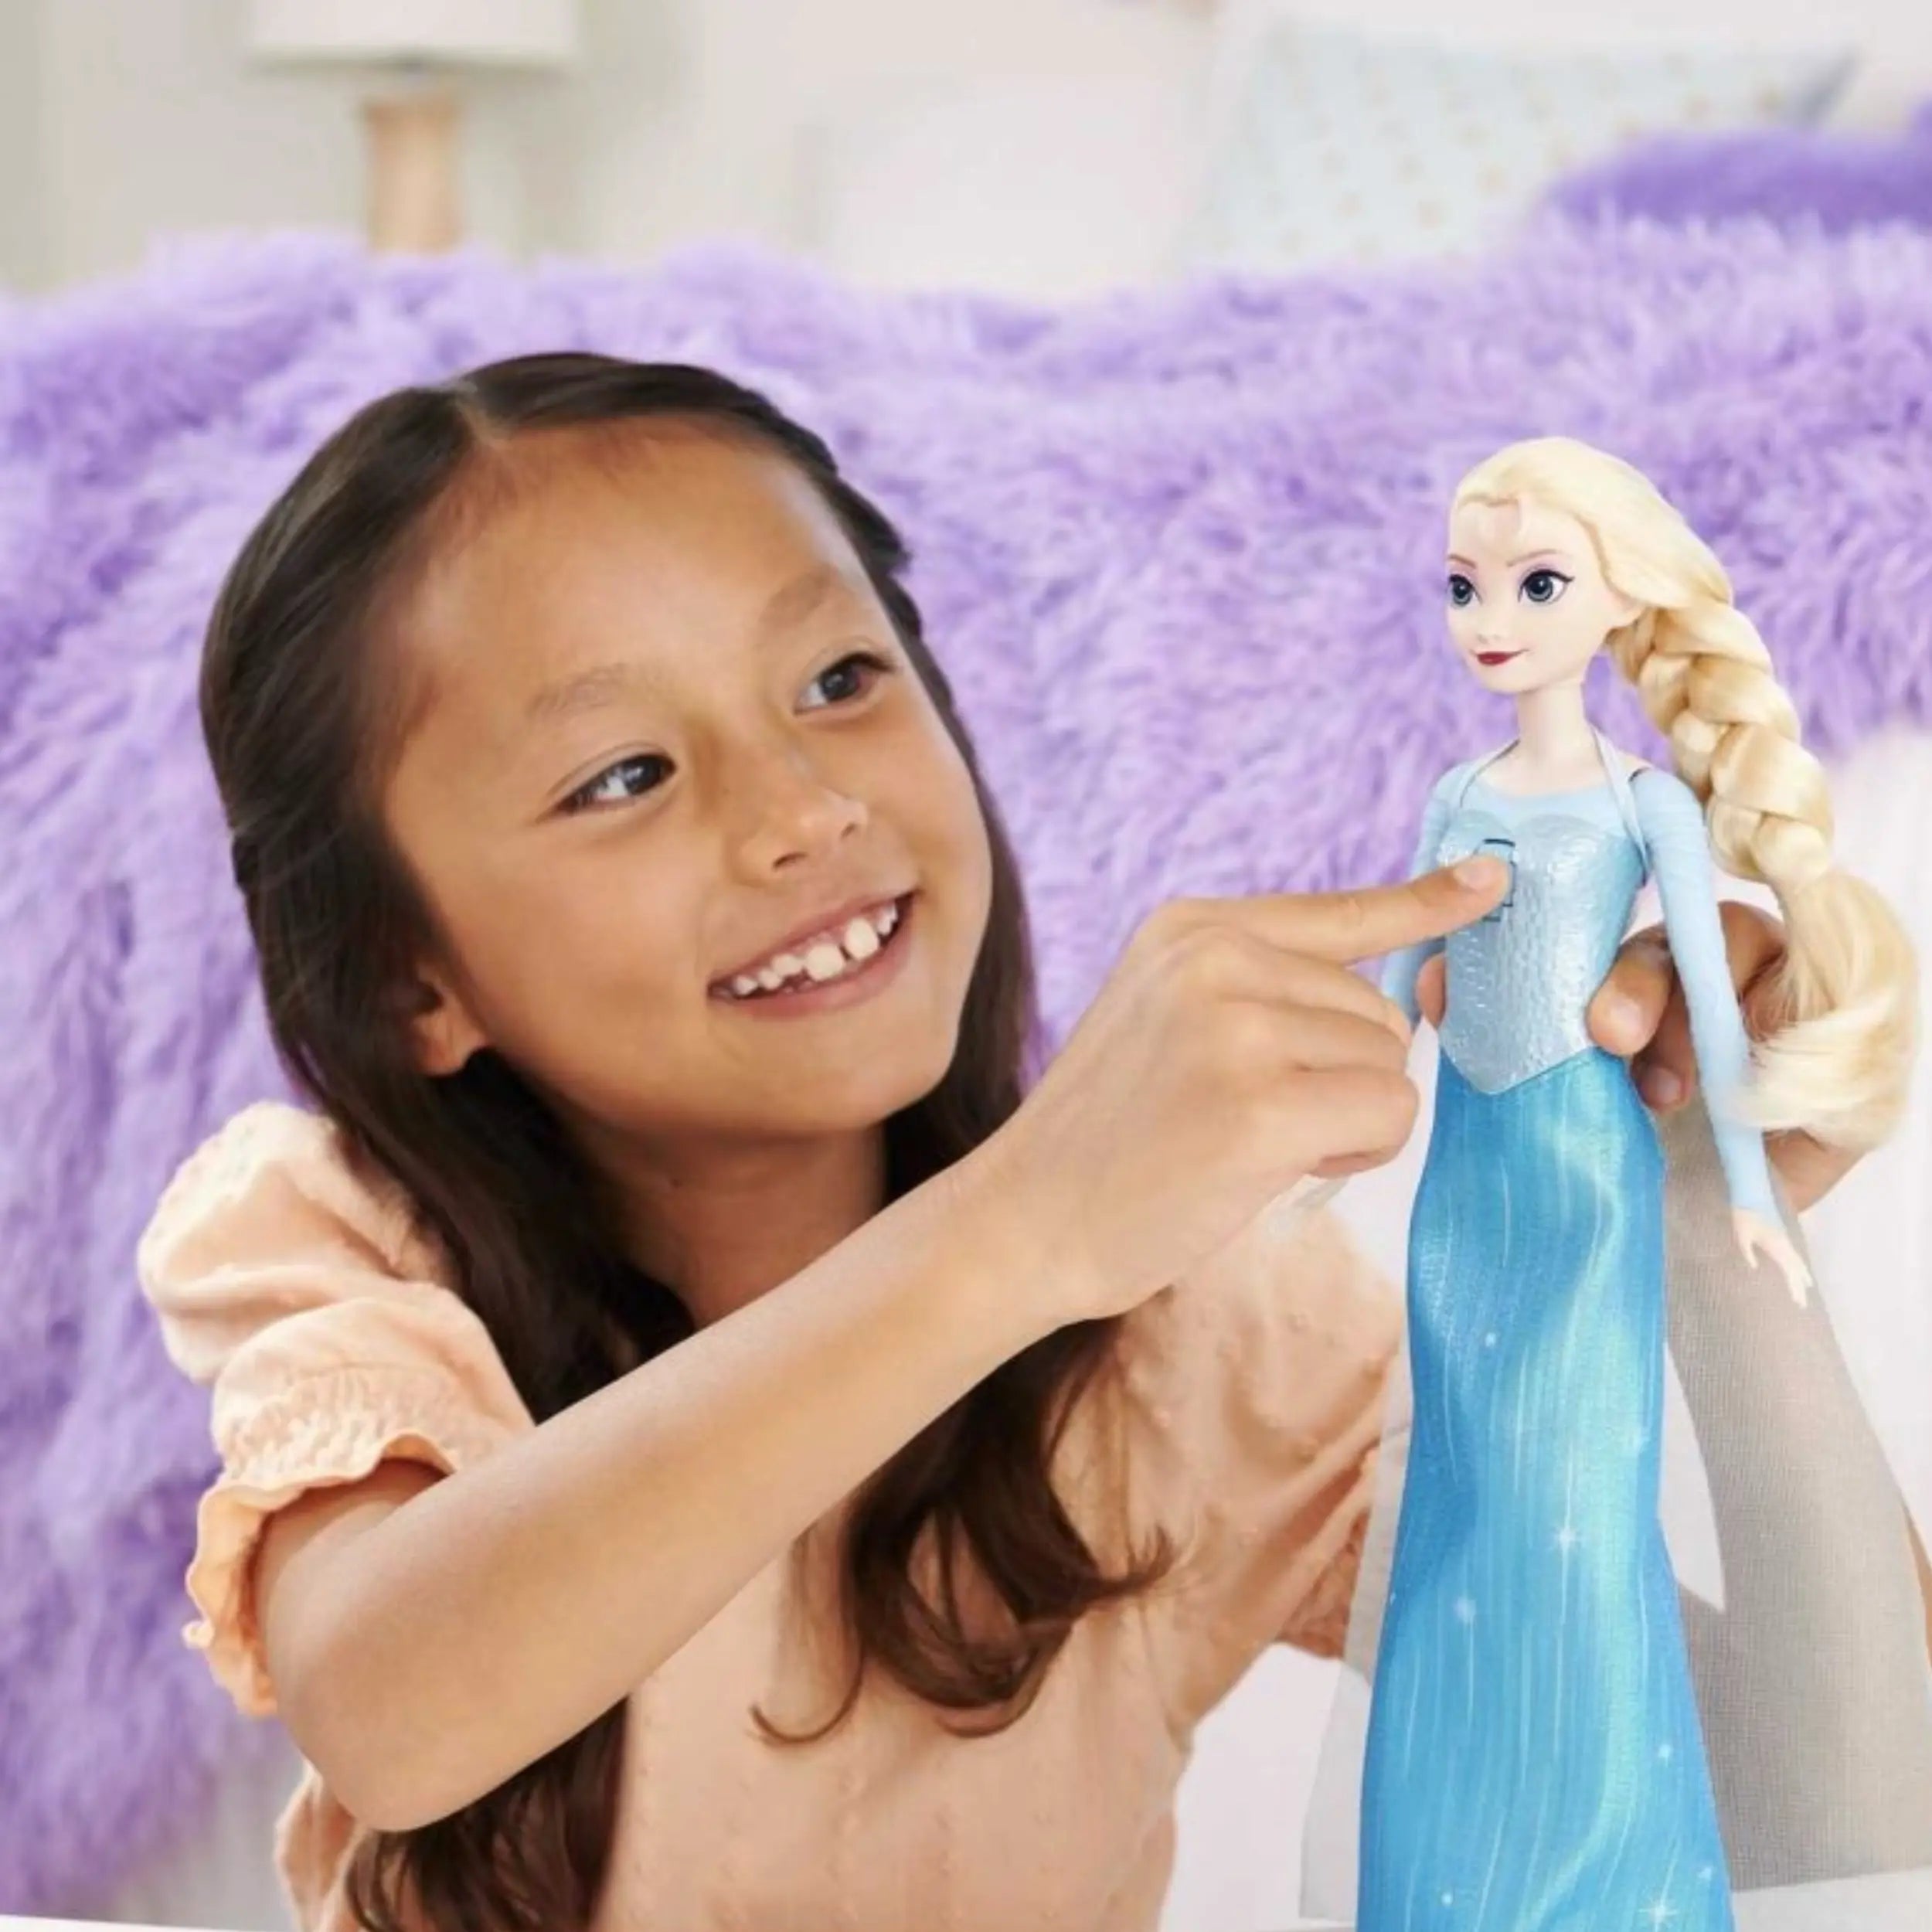 Mattel - Disney Princess Frozen Elsa Singer HMG33